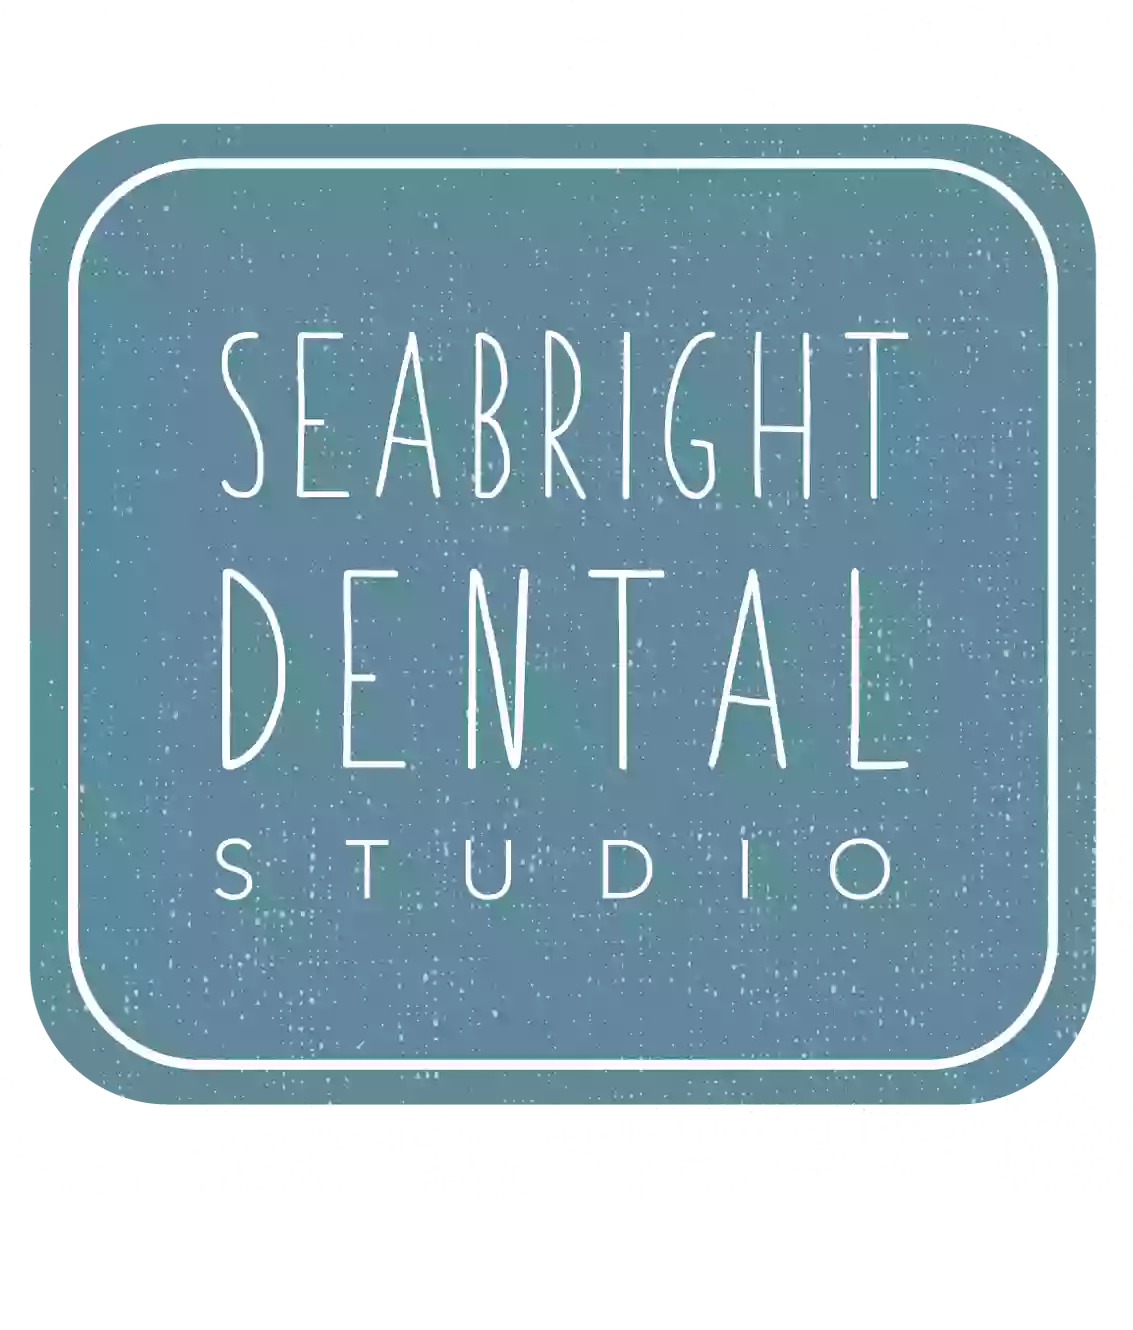 Seabright Dental Studio